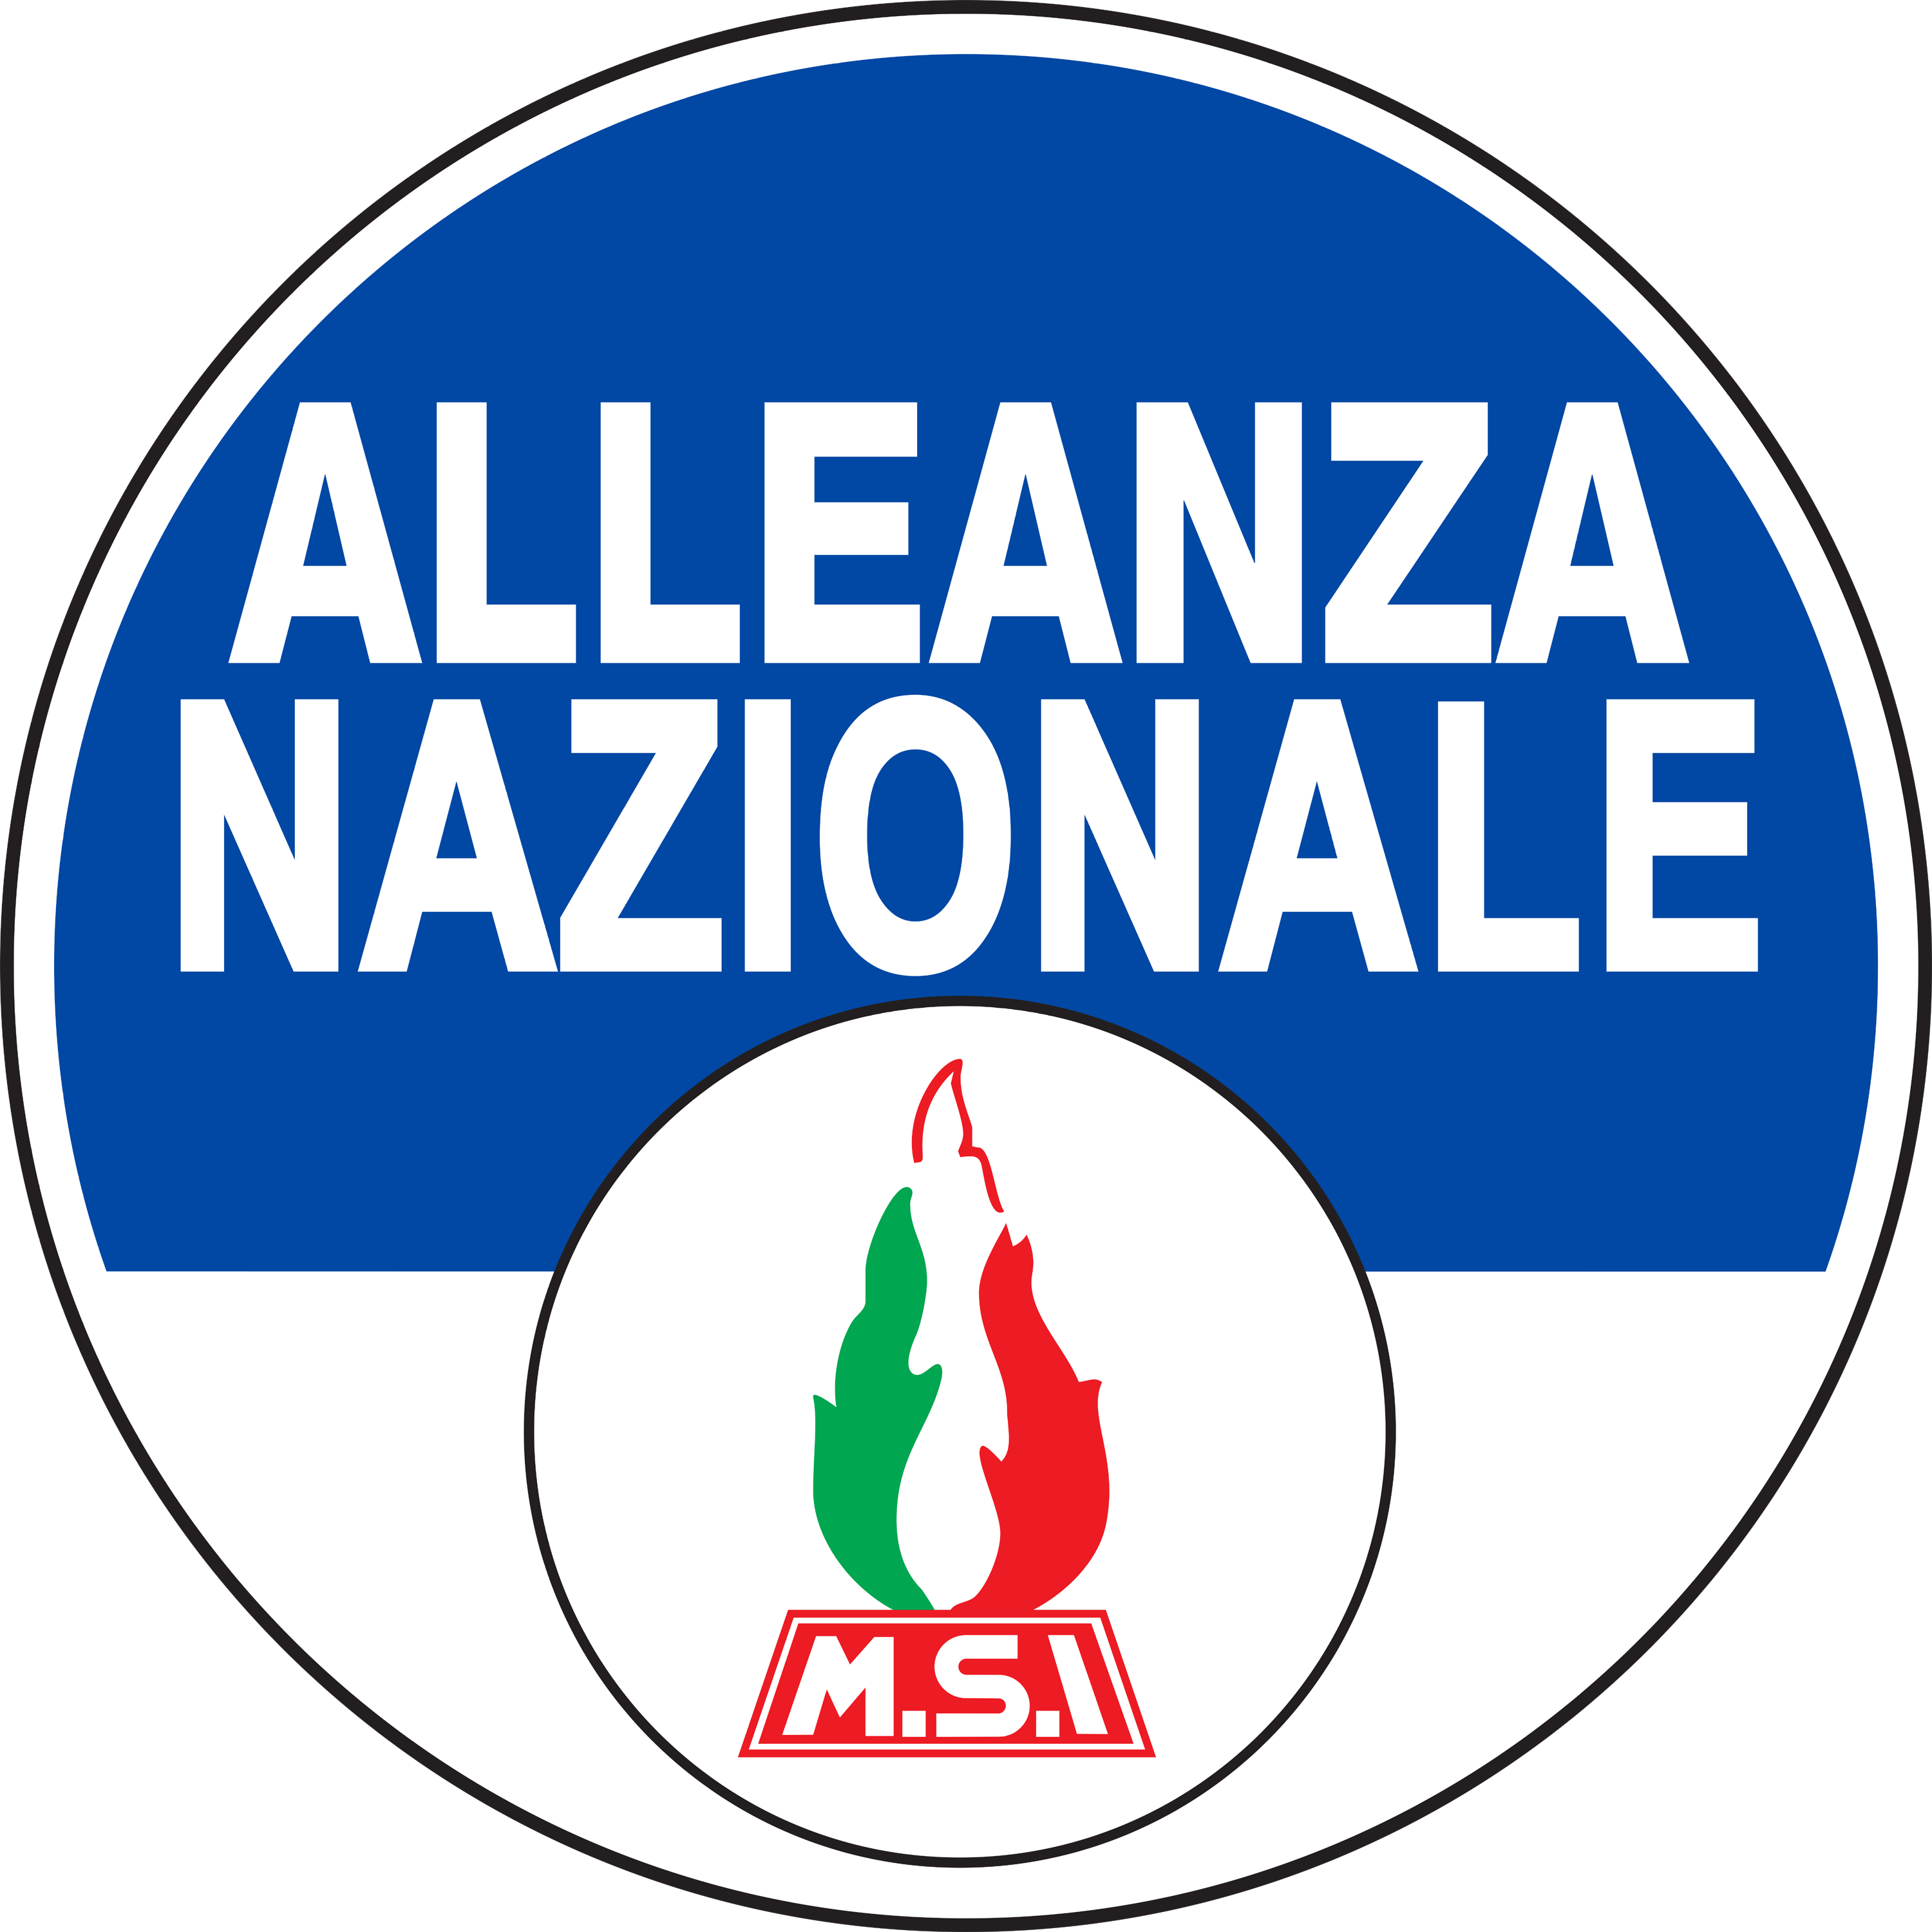 Alleanza Nazionale Logo Transparent Image